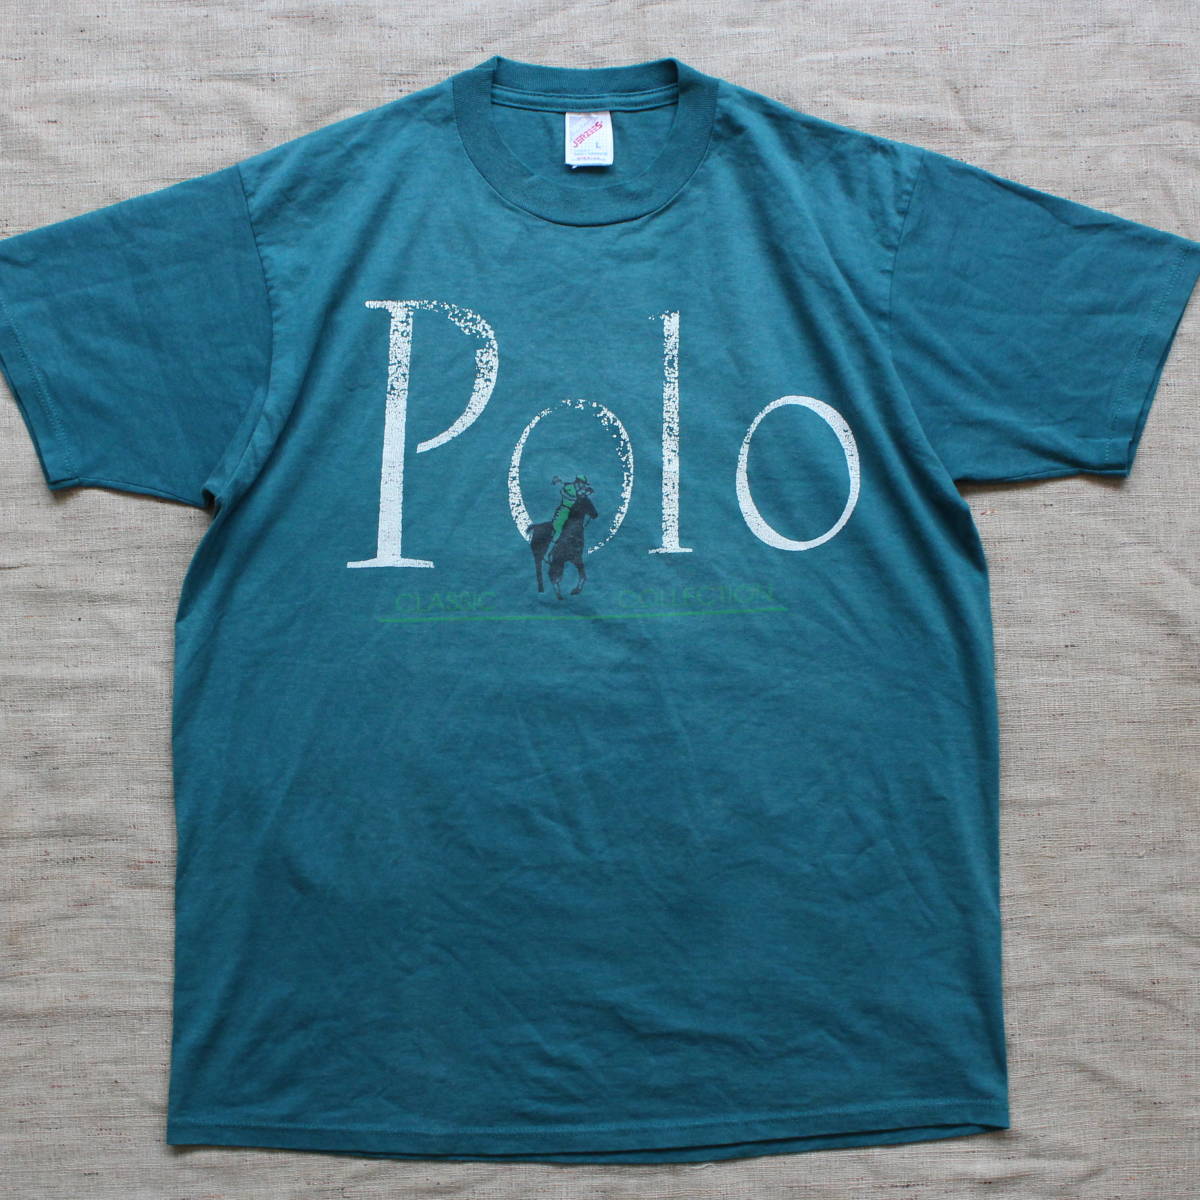 1990s ポロ Polo ヴィンテージ Tシャツ スポーツ アニマル アート 古着USA アメリカ製 動物 乗馬 競技SPORTS フェード JERZEES クラシック